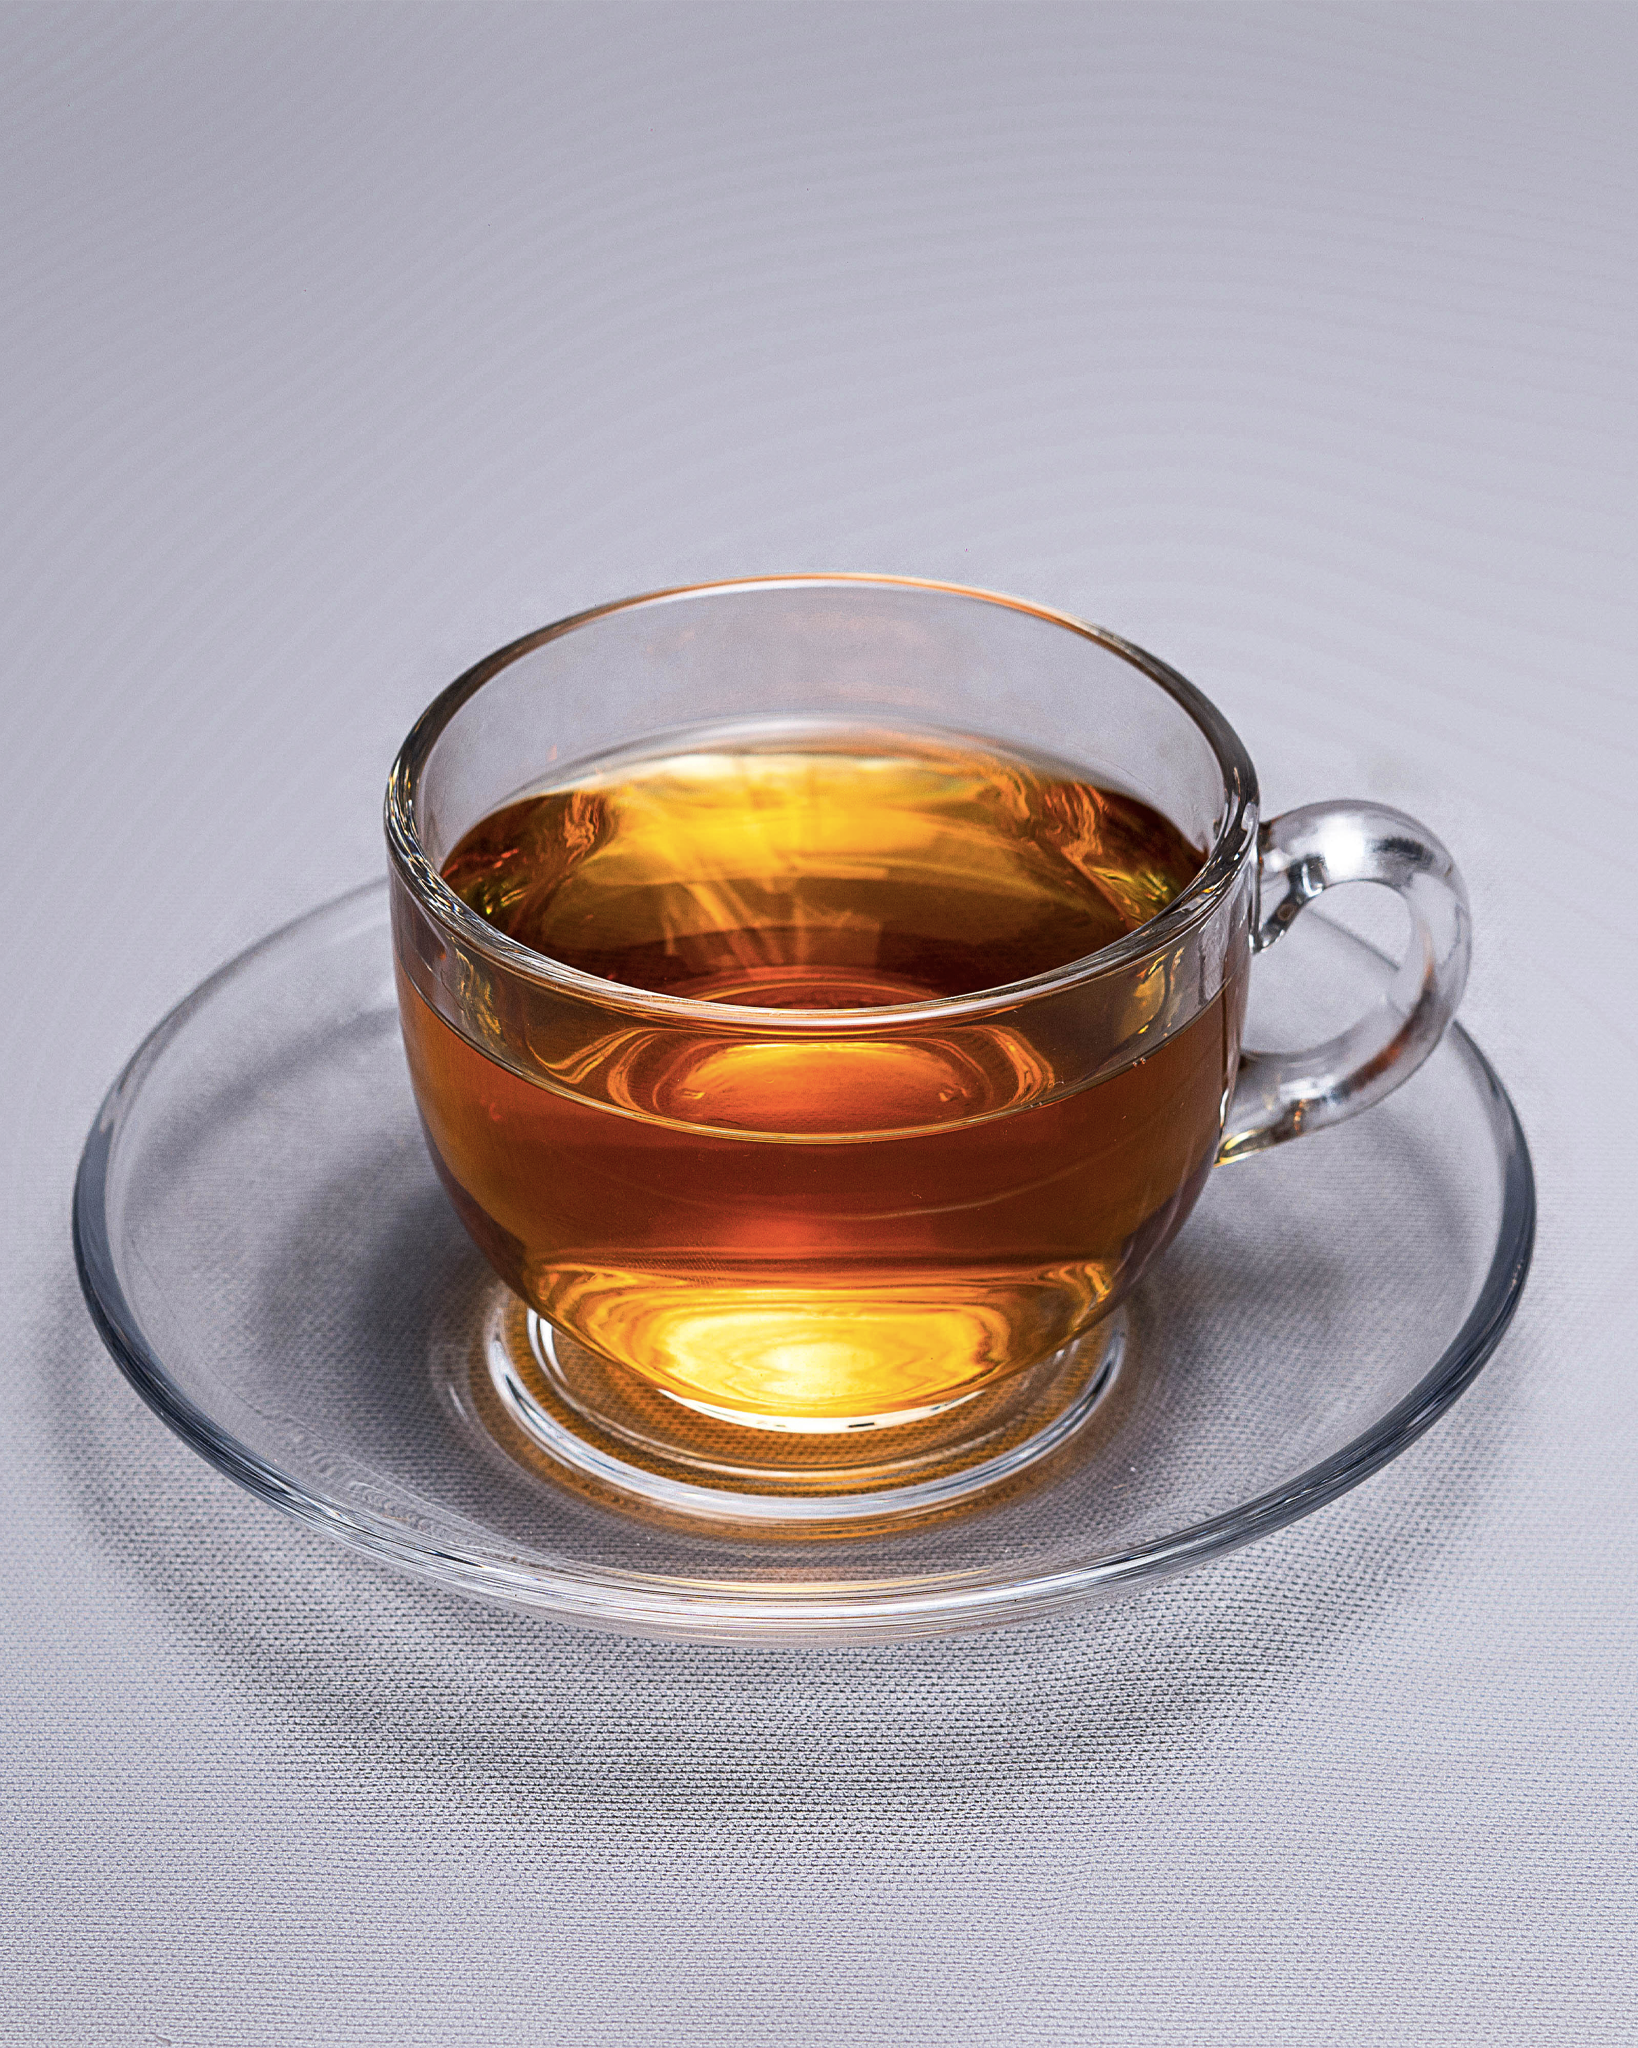 Araby Attar exotic mix of black tea